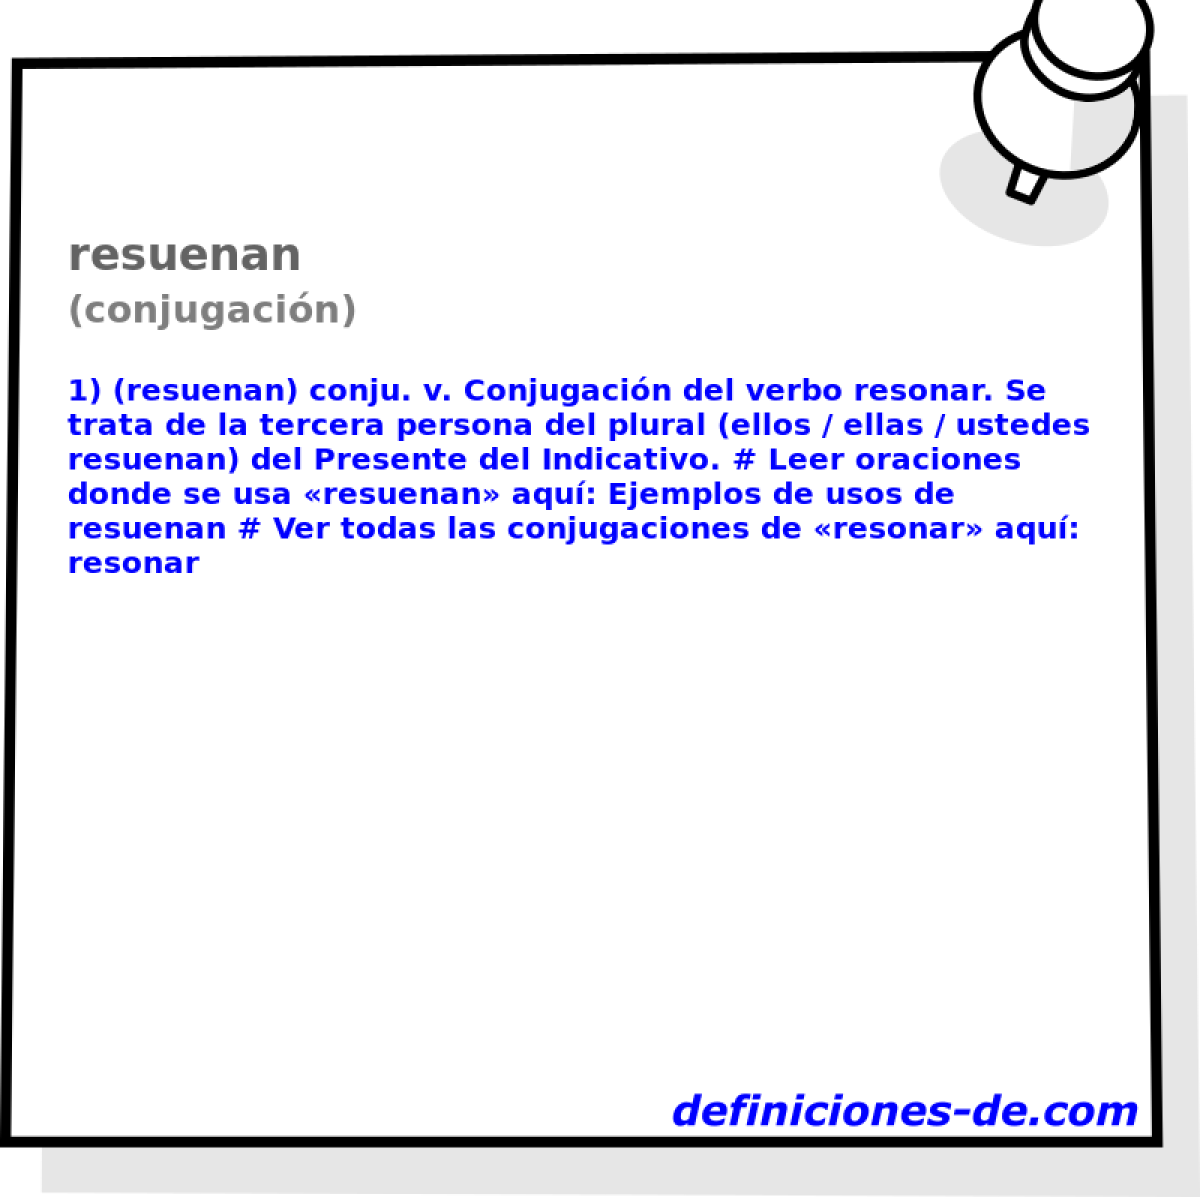 resuenan (conjugacin)